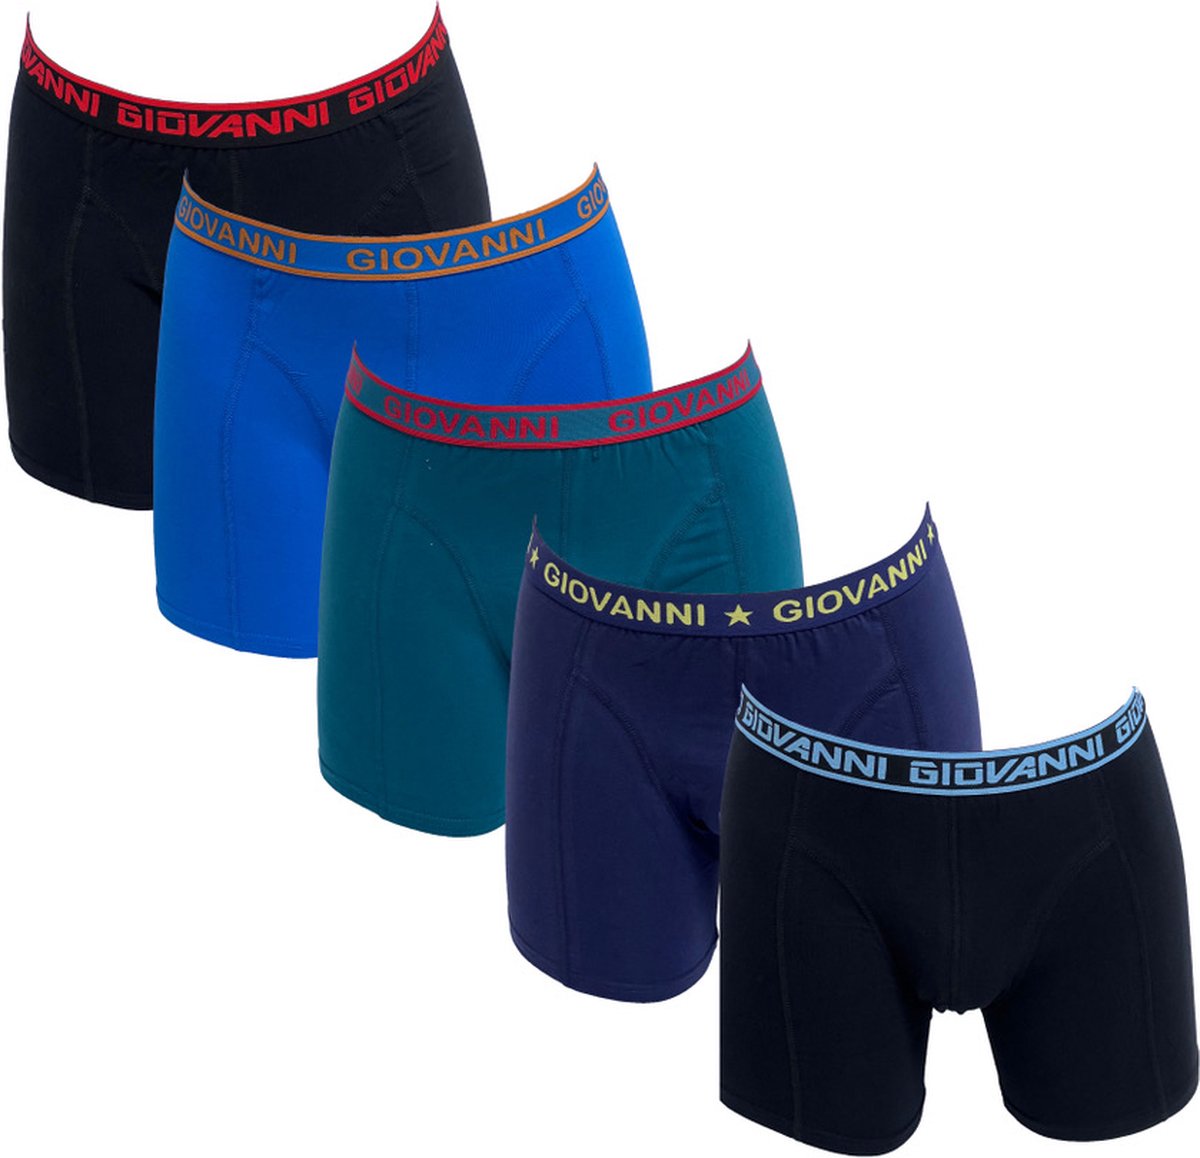 Giovanni heren boxershorts | 5-pack | MAAT S | M34 zwart/marine/groen/turquoise/zwart